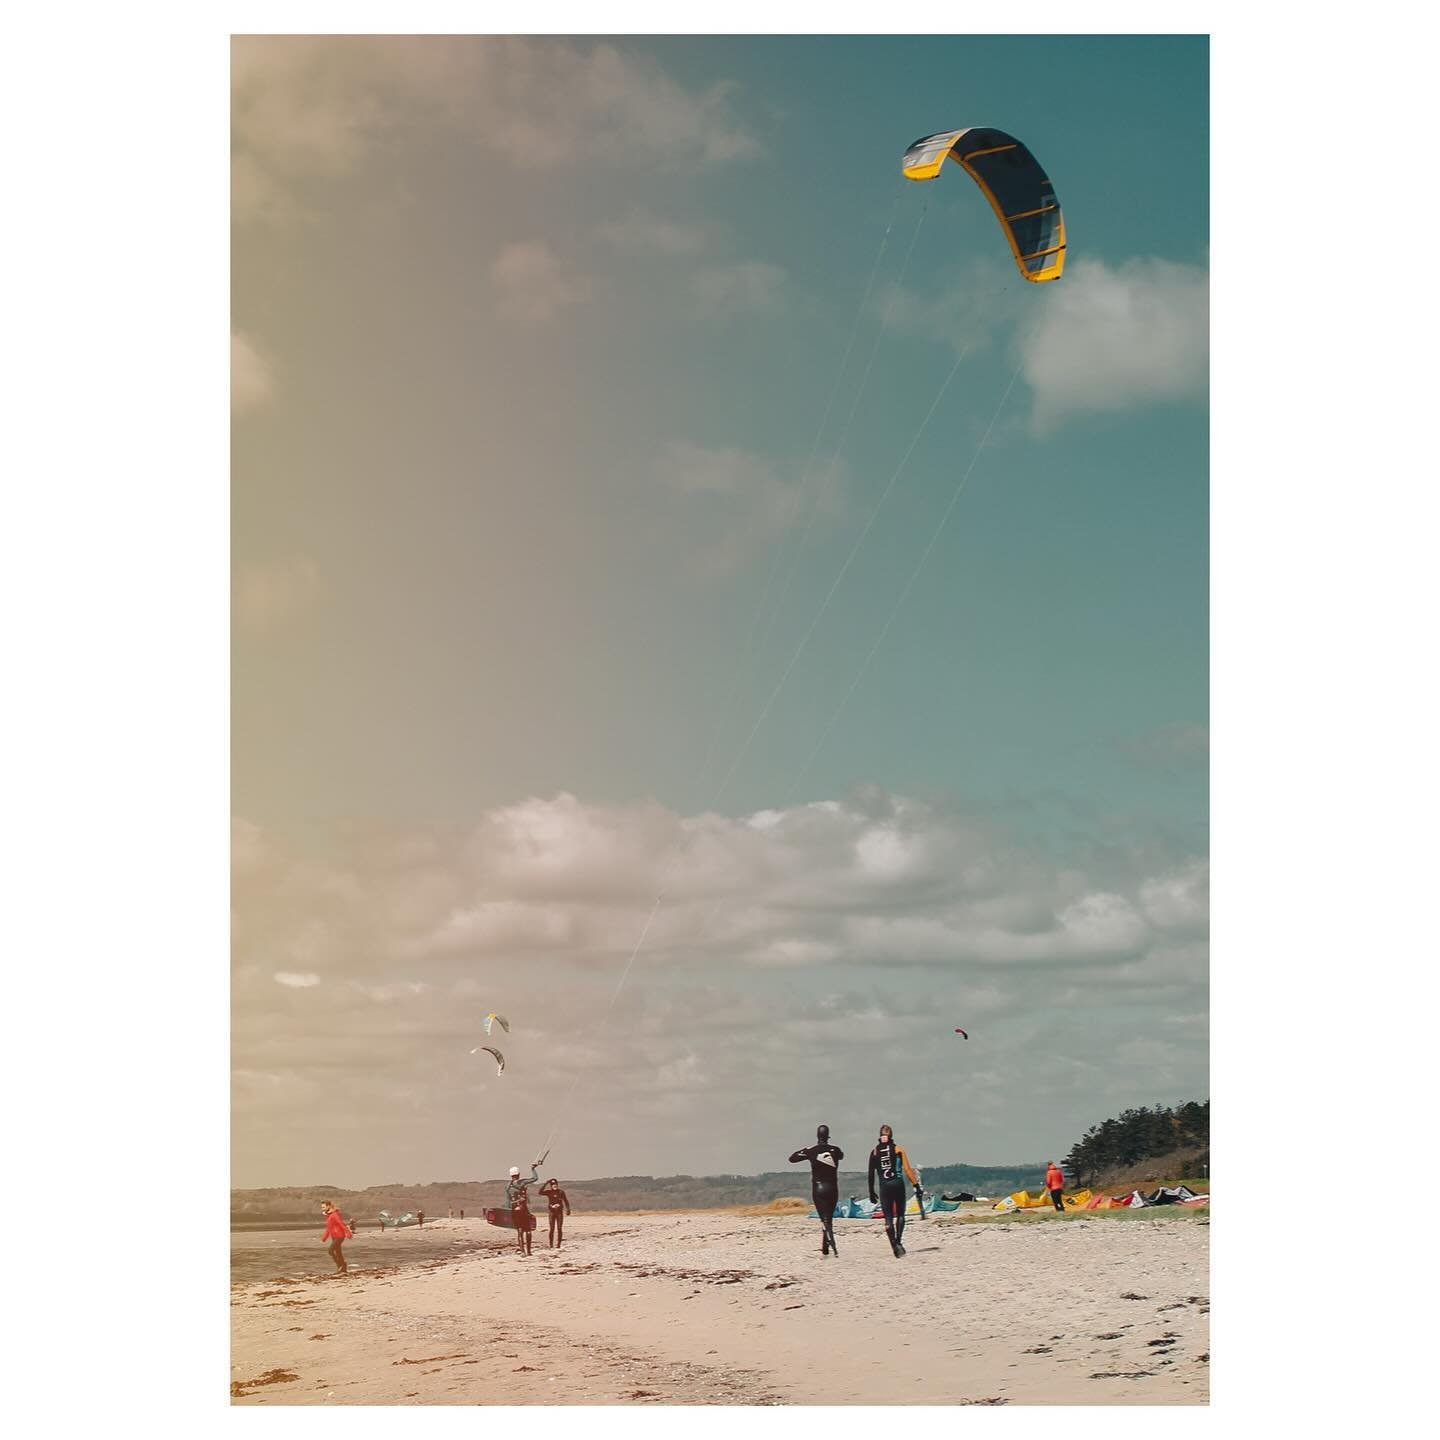 Endless summers  Part 1
.
.
.
#endlesssummer #beach #beachlife #instagram #instagood #instamood #instatravel #travel #travelphotography #photography #photooftheday #naturephotography #nature #photoftheday #kitesurfing #ebeltoft #danmark #rundtidanmar